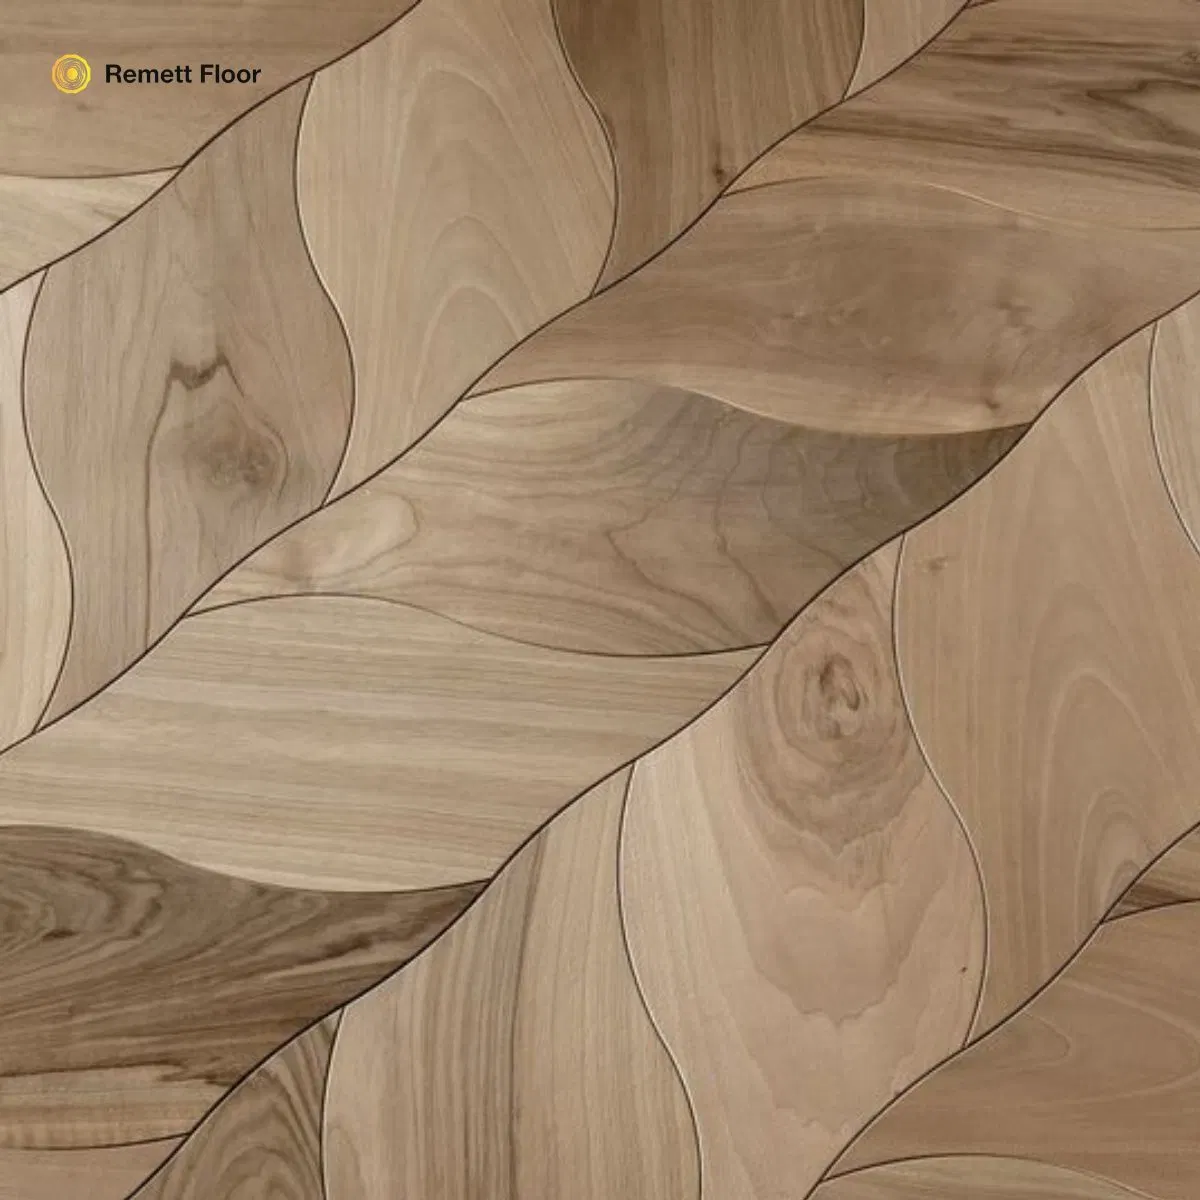 190mm Wide Natural White Oak Solid Wood+Flooring Hot Sale in USA Distressed Oak Engineered Hardwood Flooring